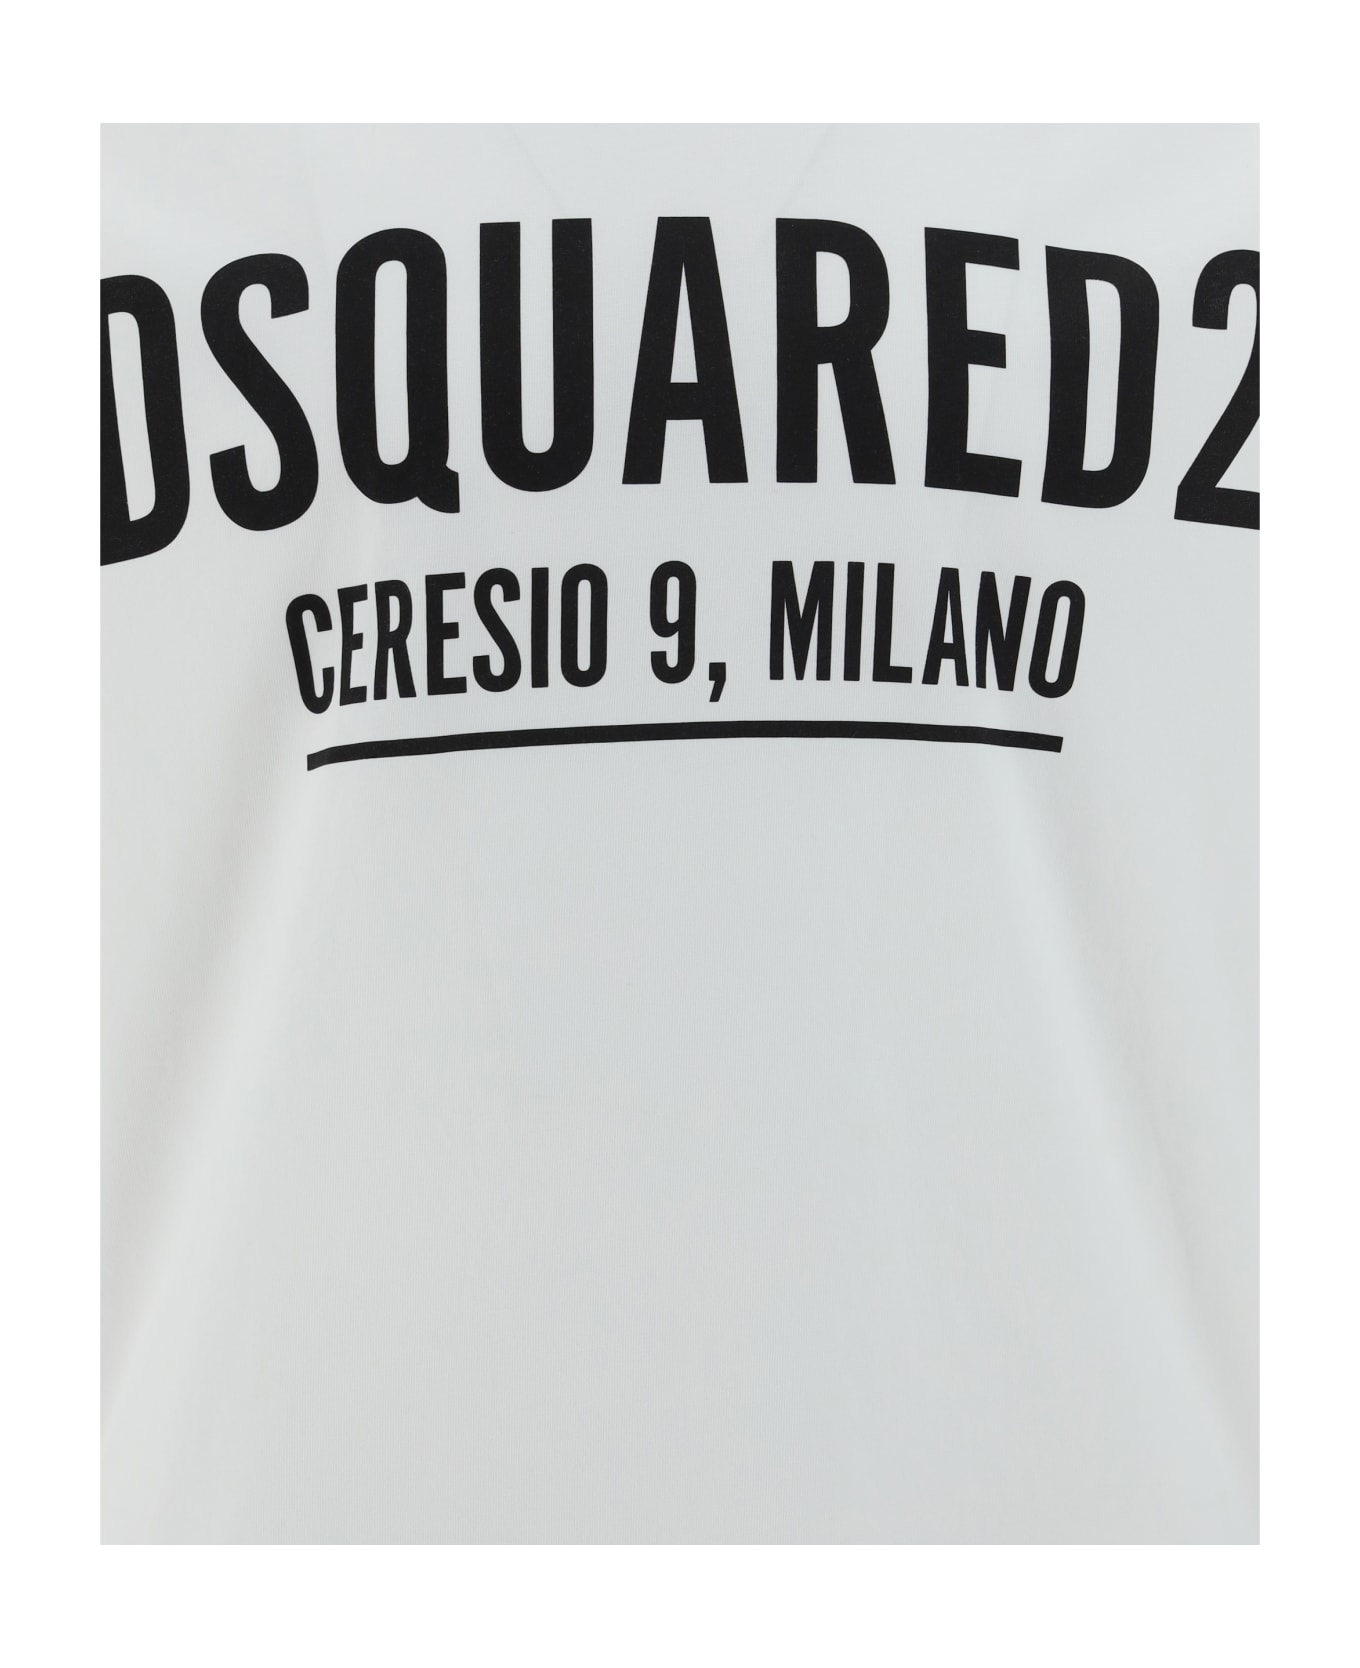 Dsquared2 T-shirt - C